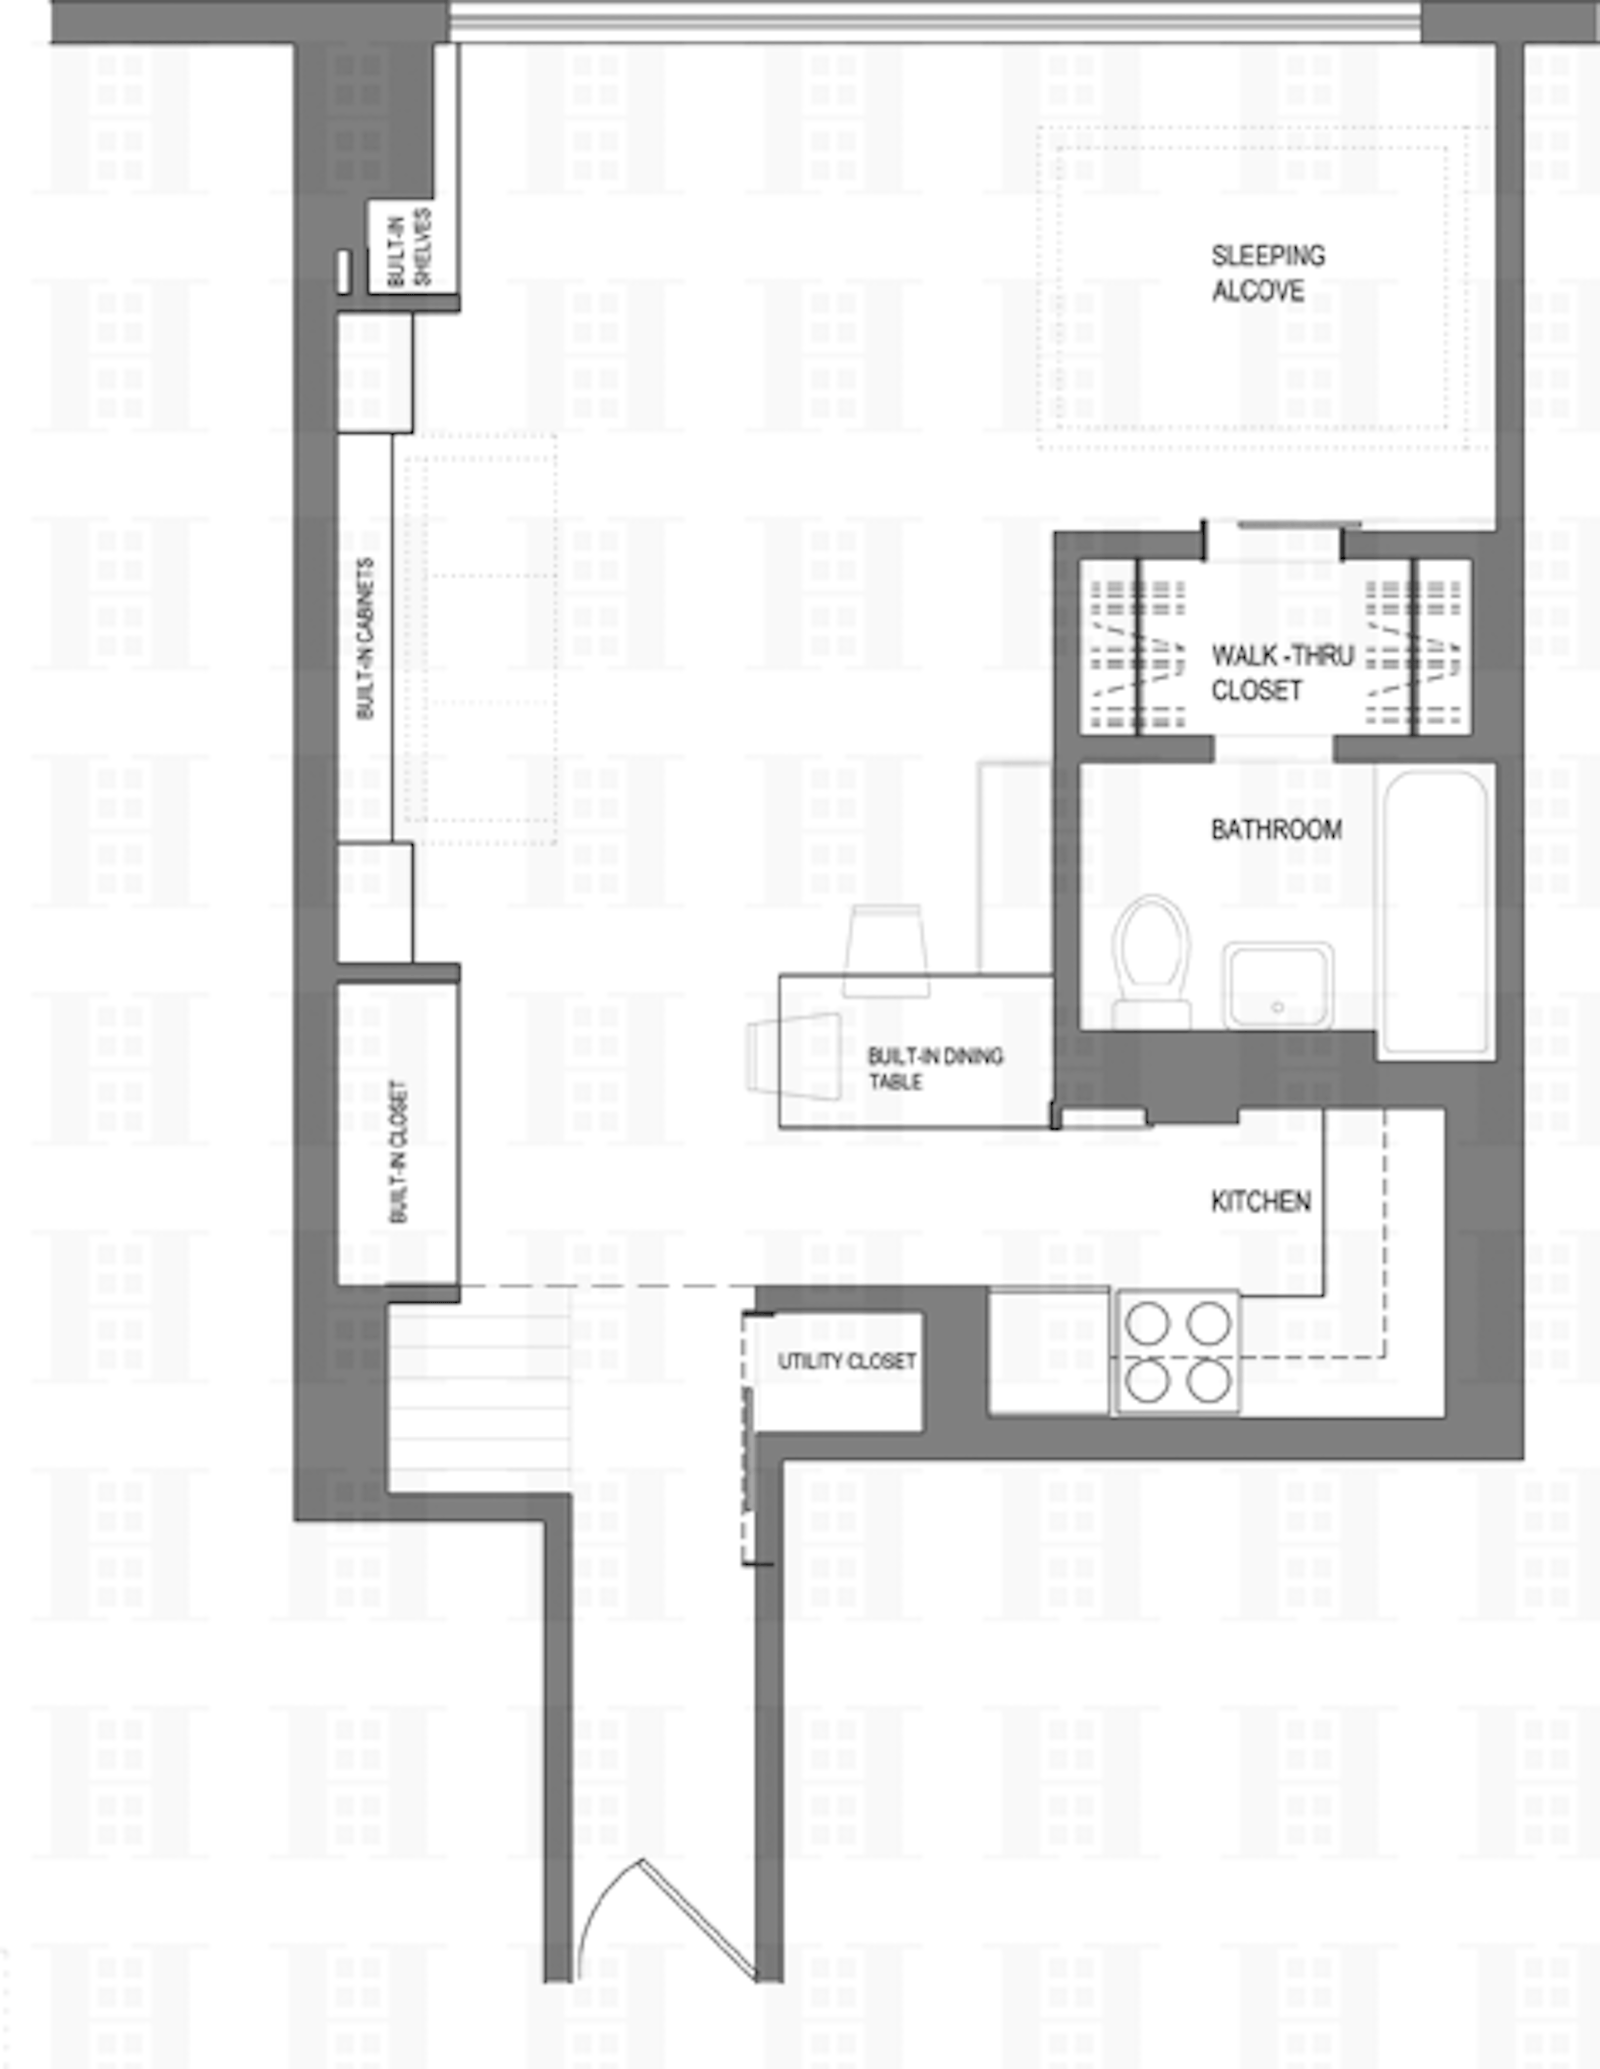 Floorplan for 430 West 34th Street, 6A